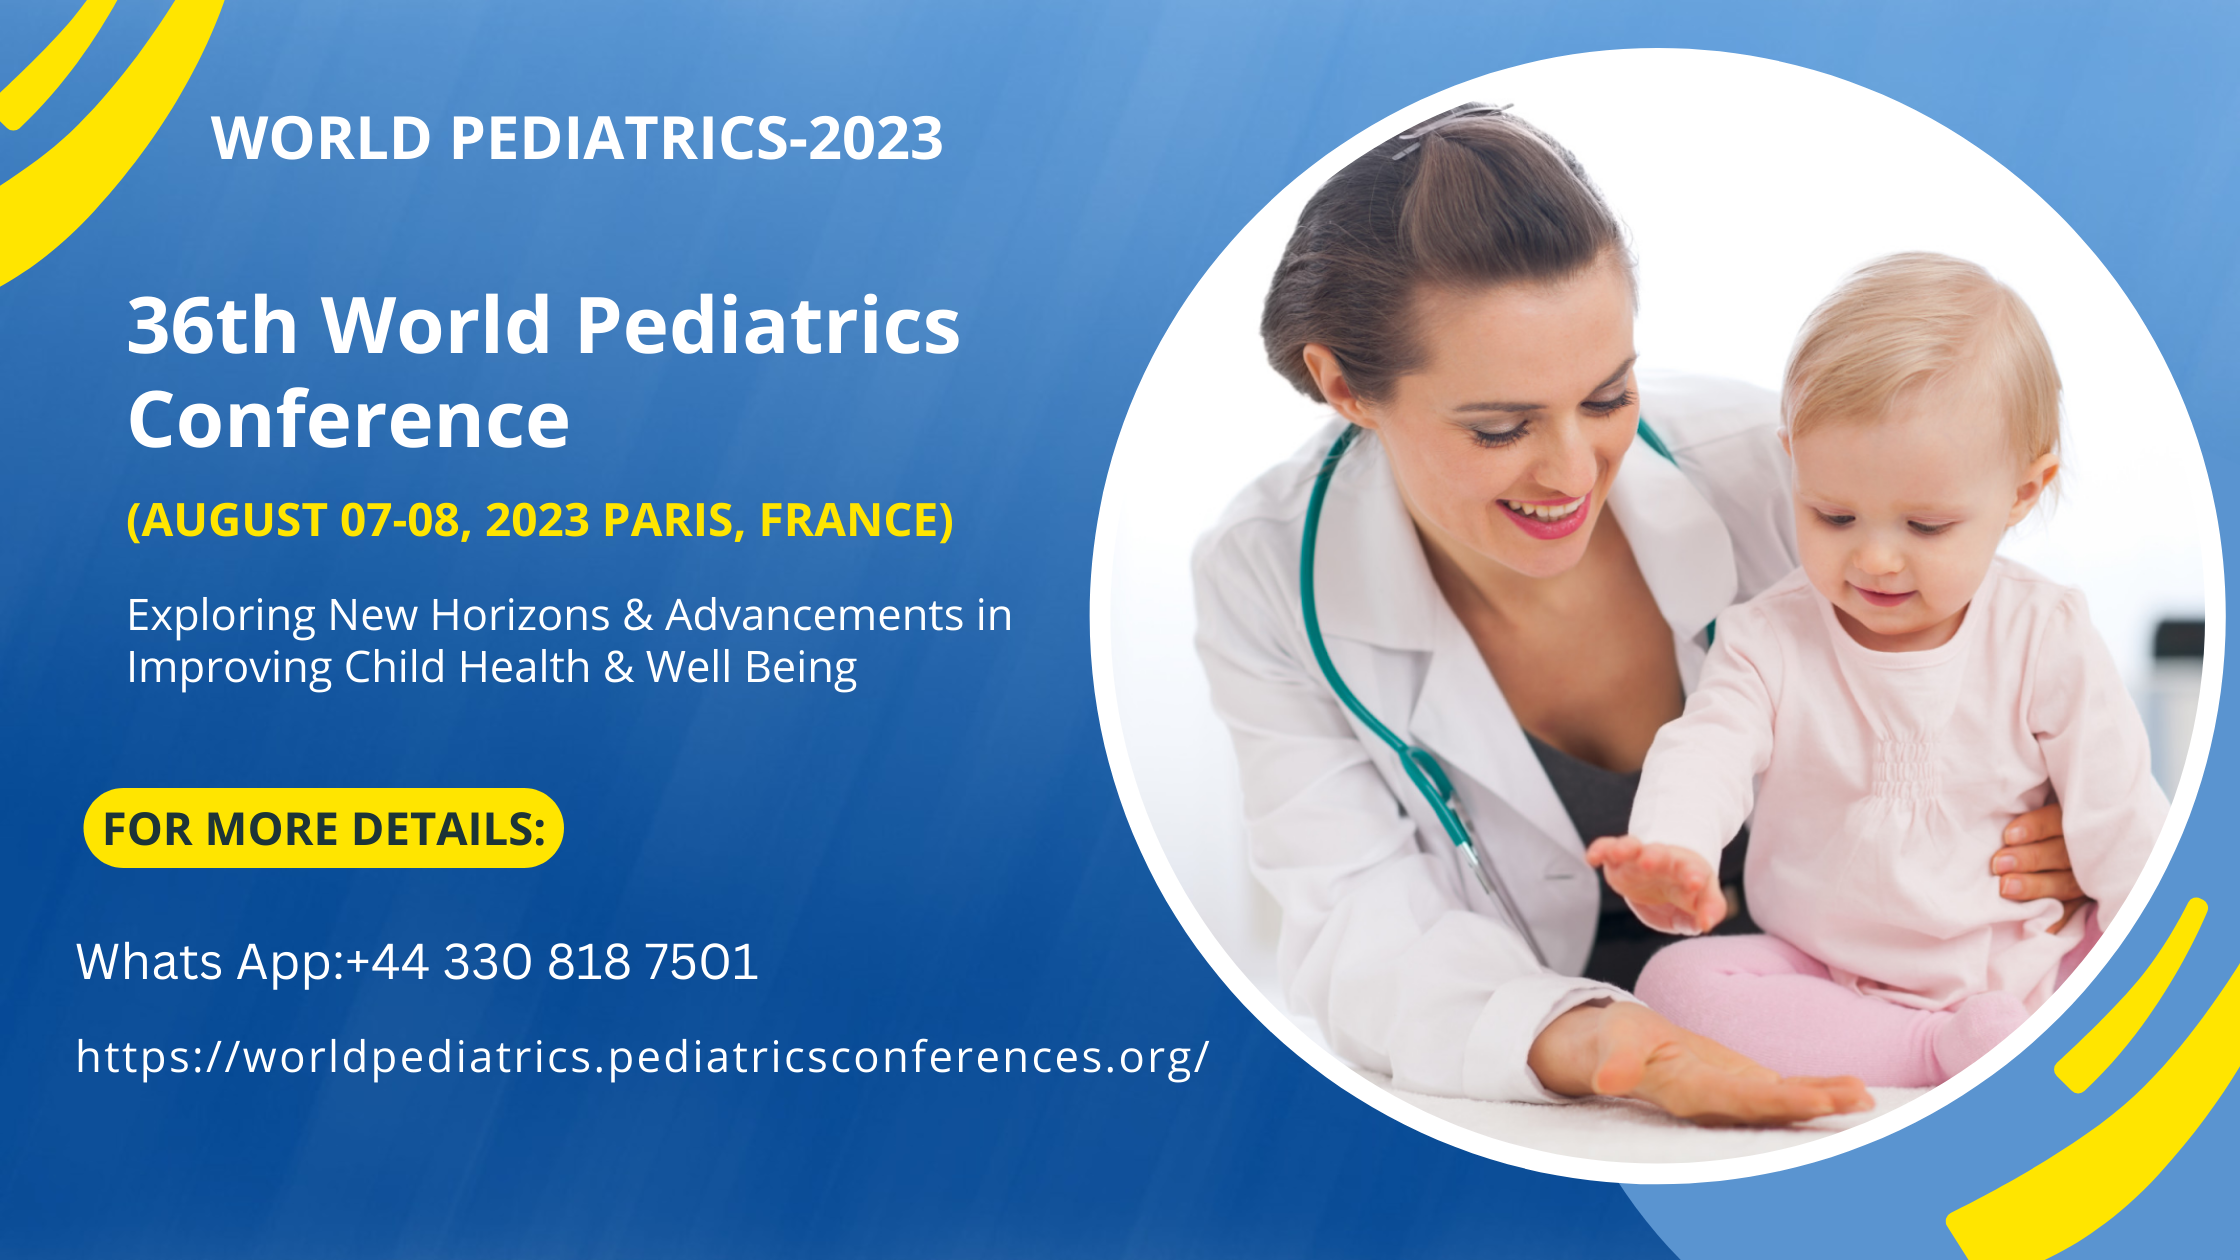 36th World Pediatrics Conference, Paris, France